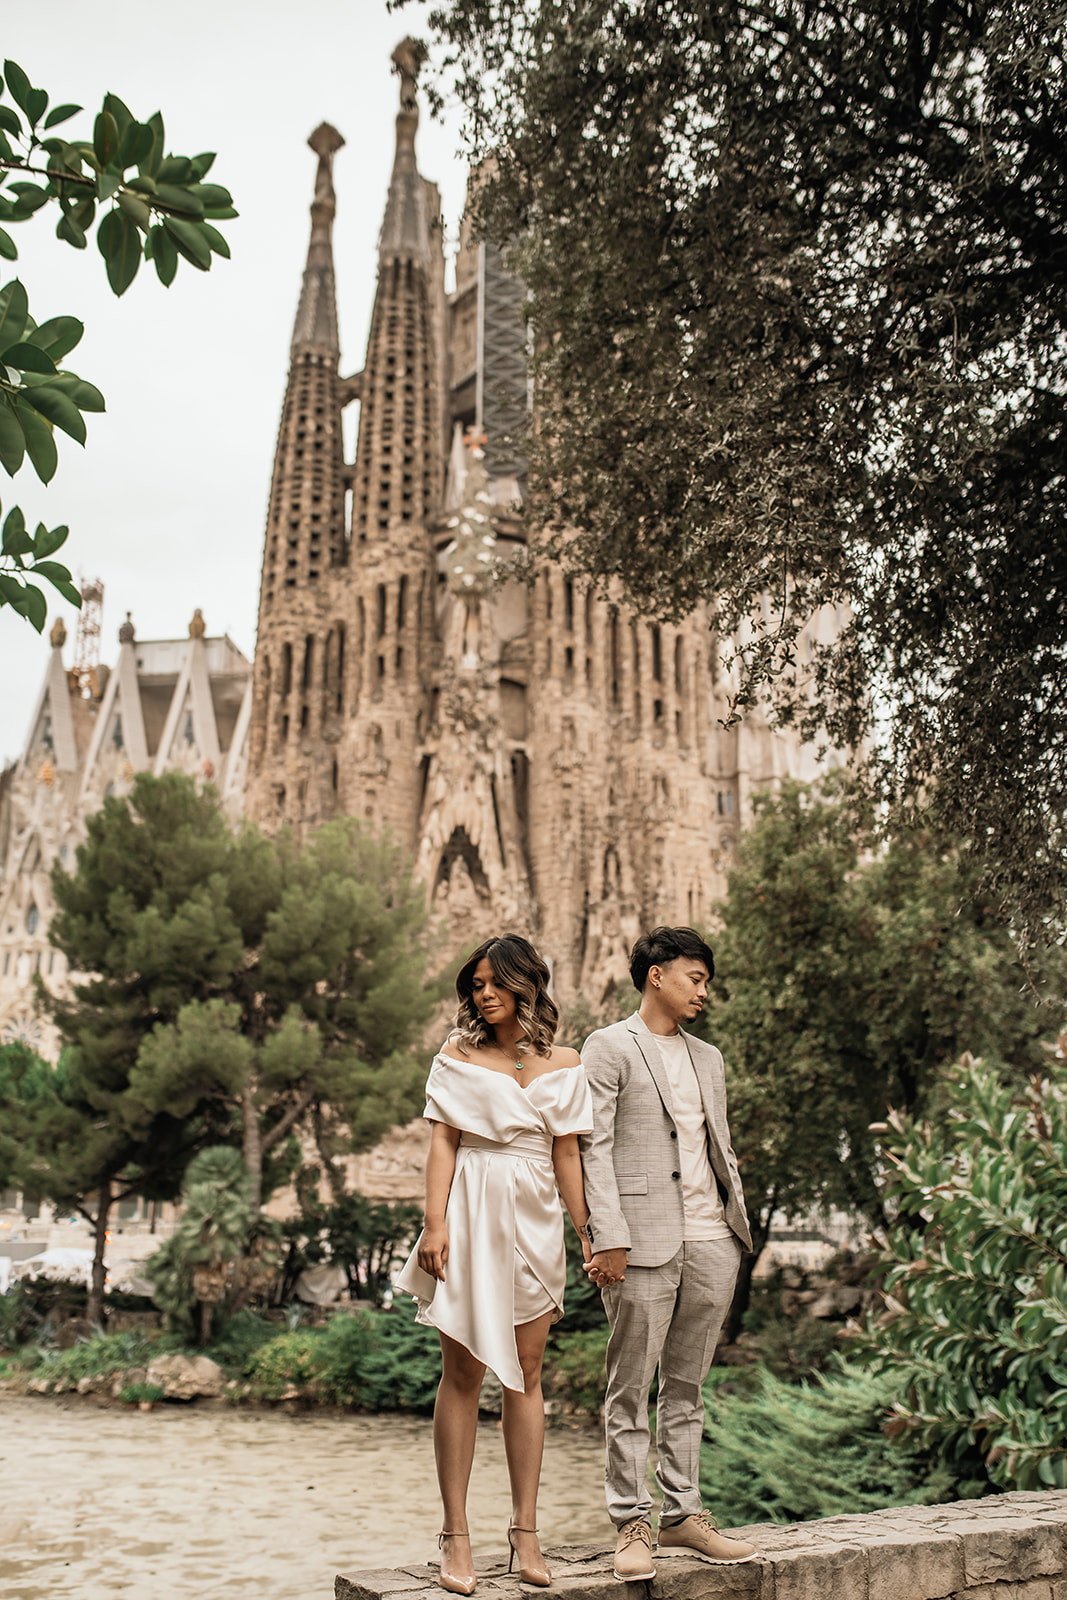 Photoshoot Locations in Barcelona